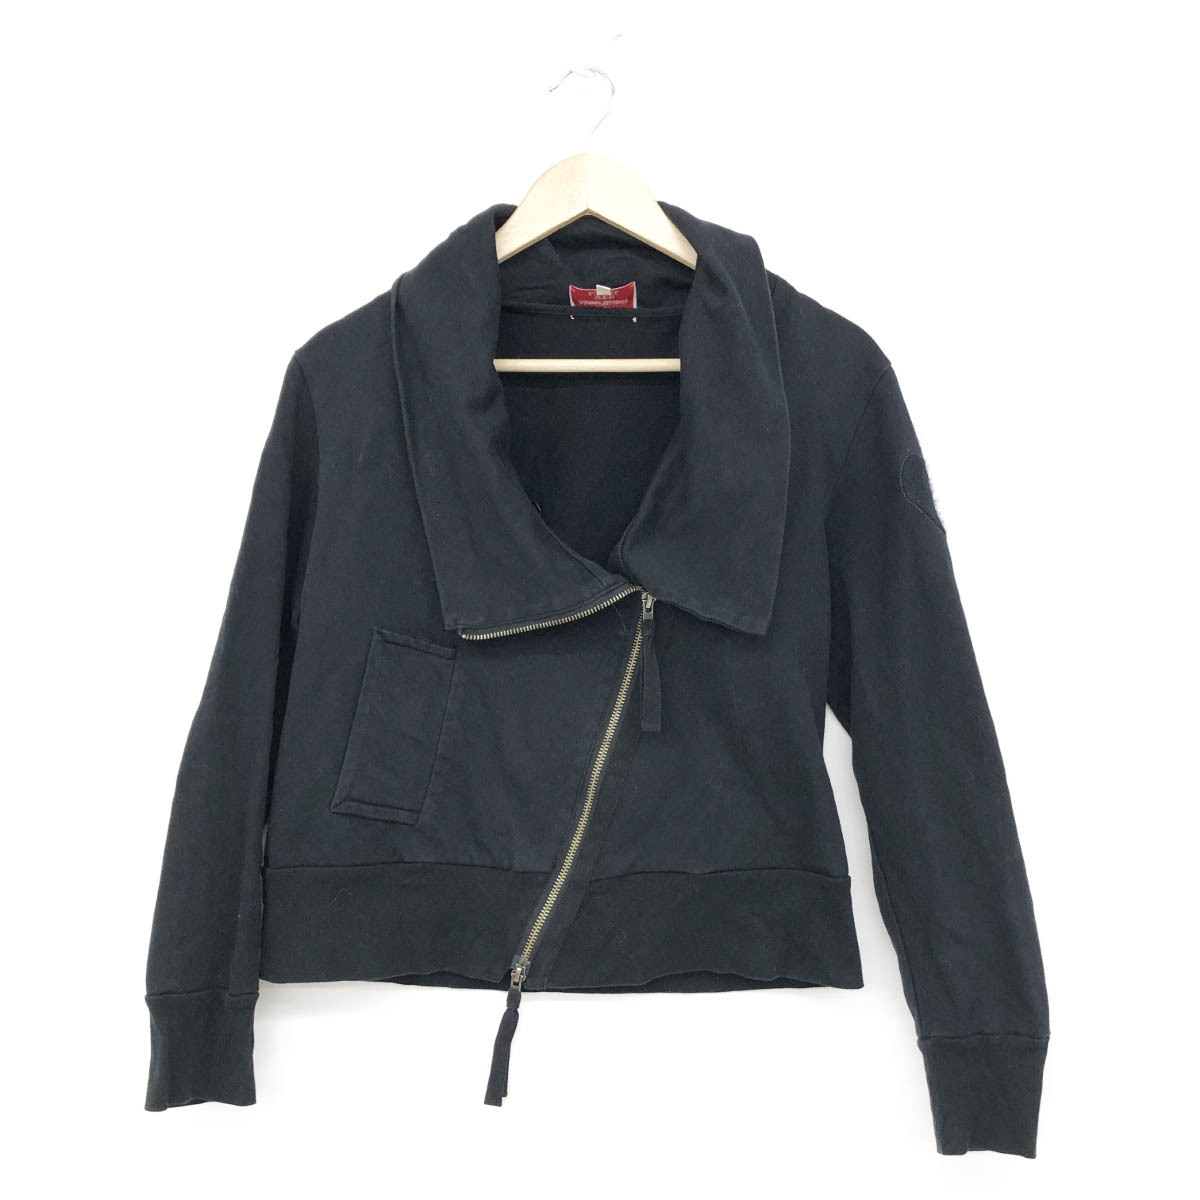 ◆ Vivienne Westwood Viviennes Westwood Red Label деформированная куртка Размер 3 ◆ Черные 100% дамы Внешнее сердце